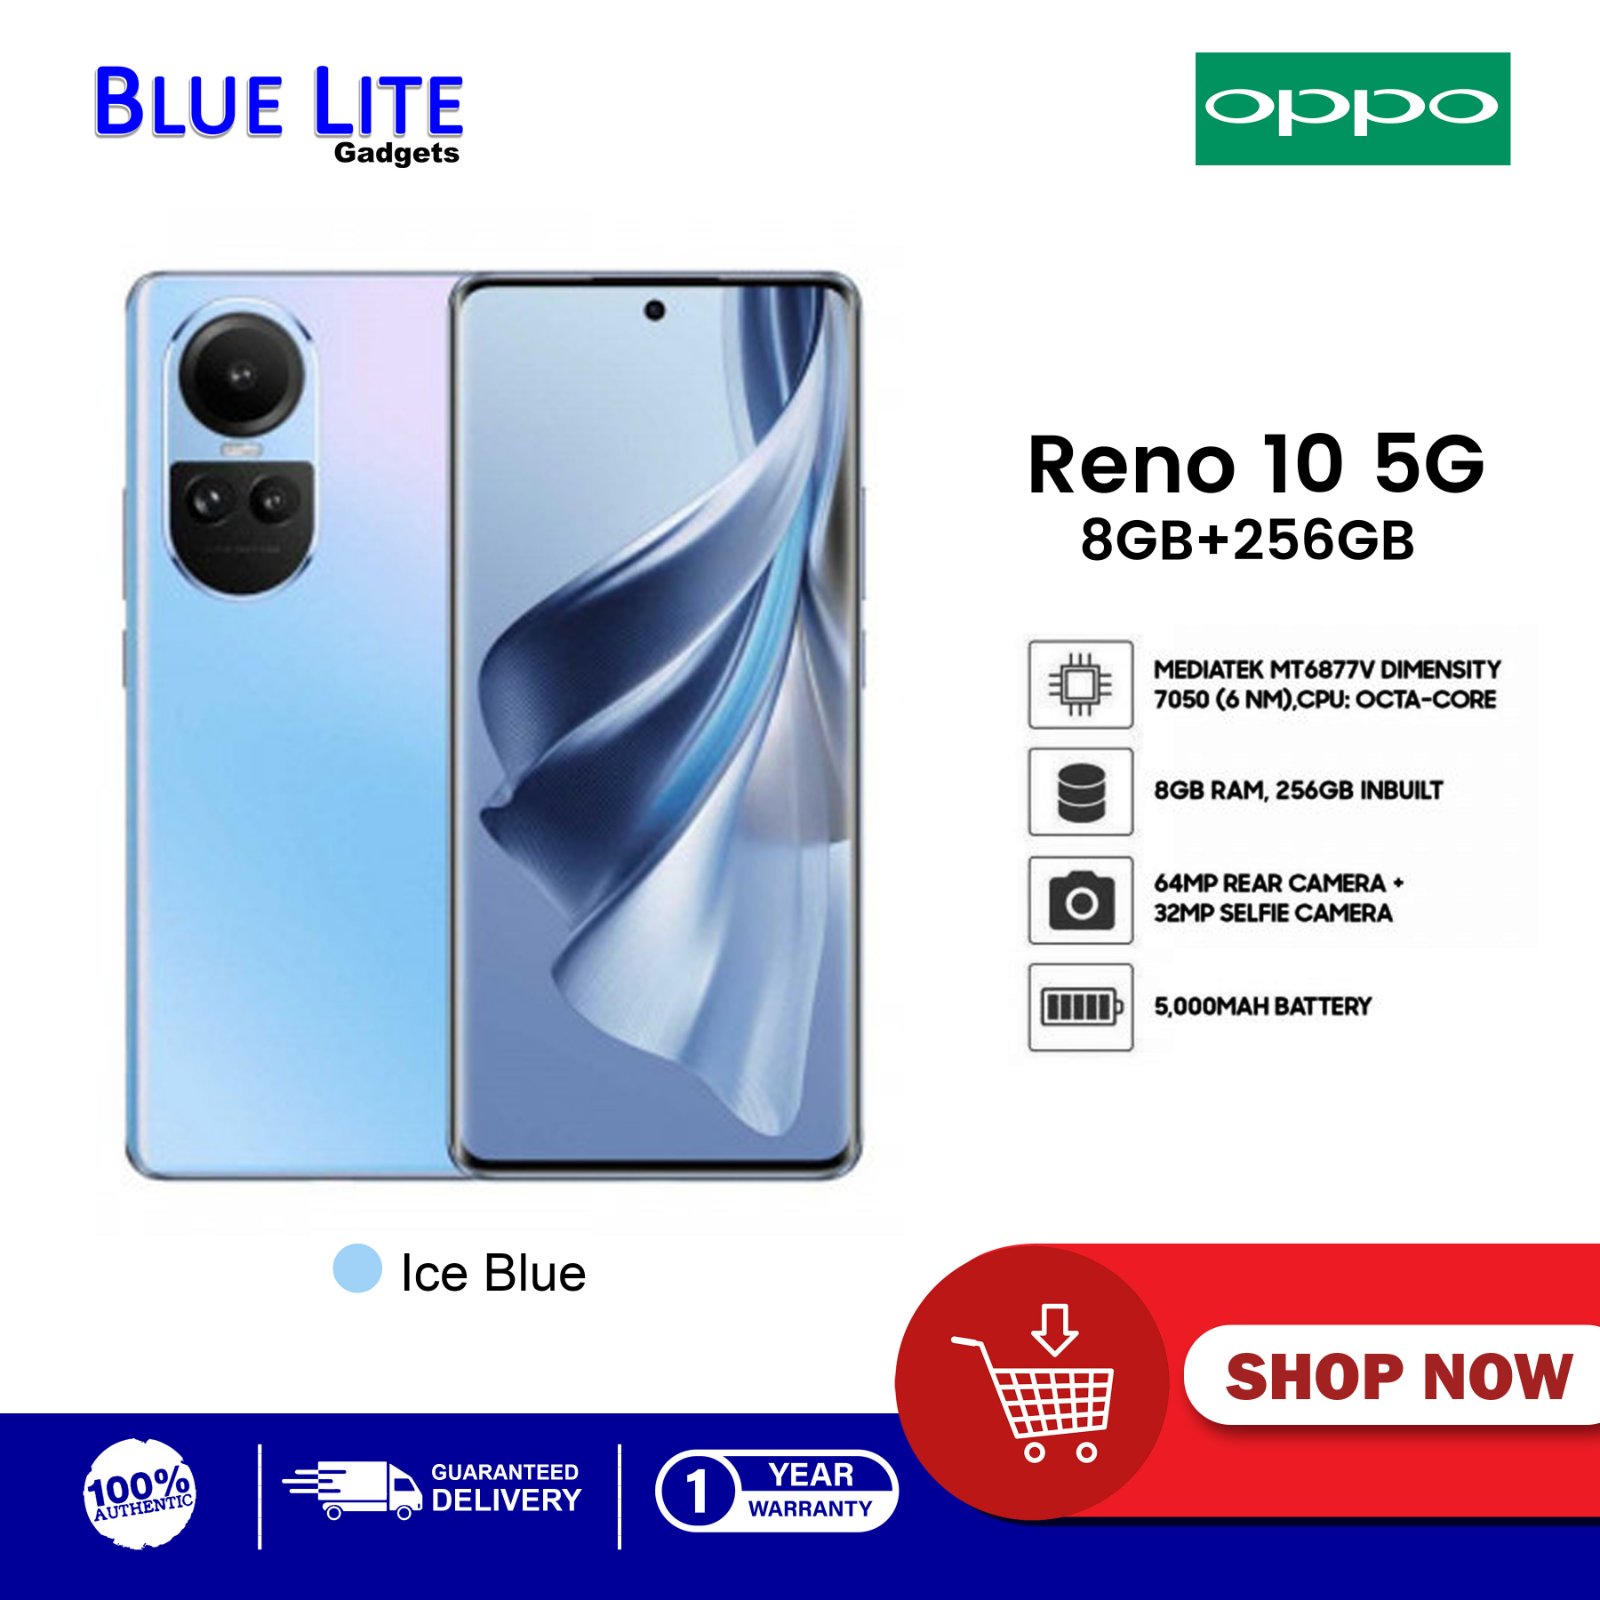 Oppo Reno 10 5g 8gb256gb Ice Blue Blue Lite Gadgets Inc 4681